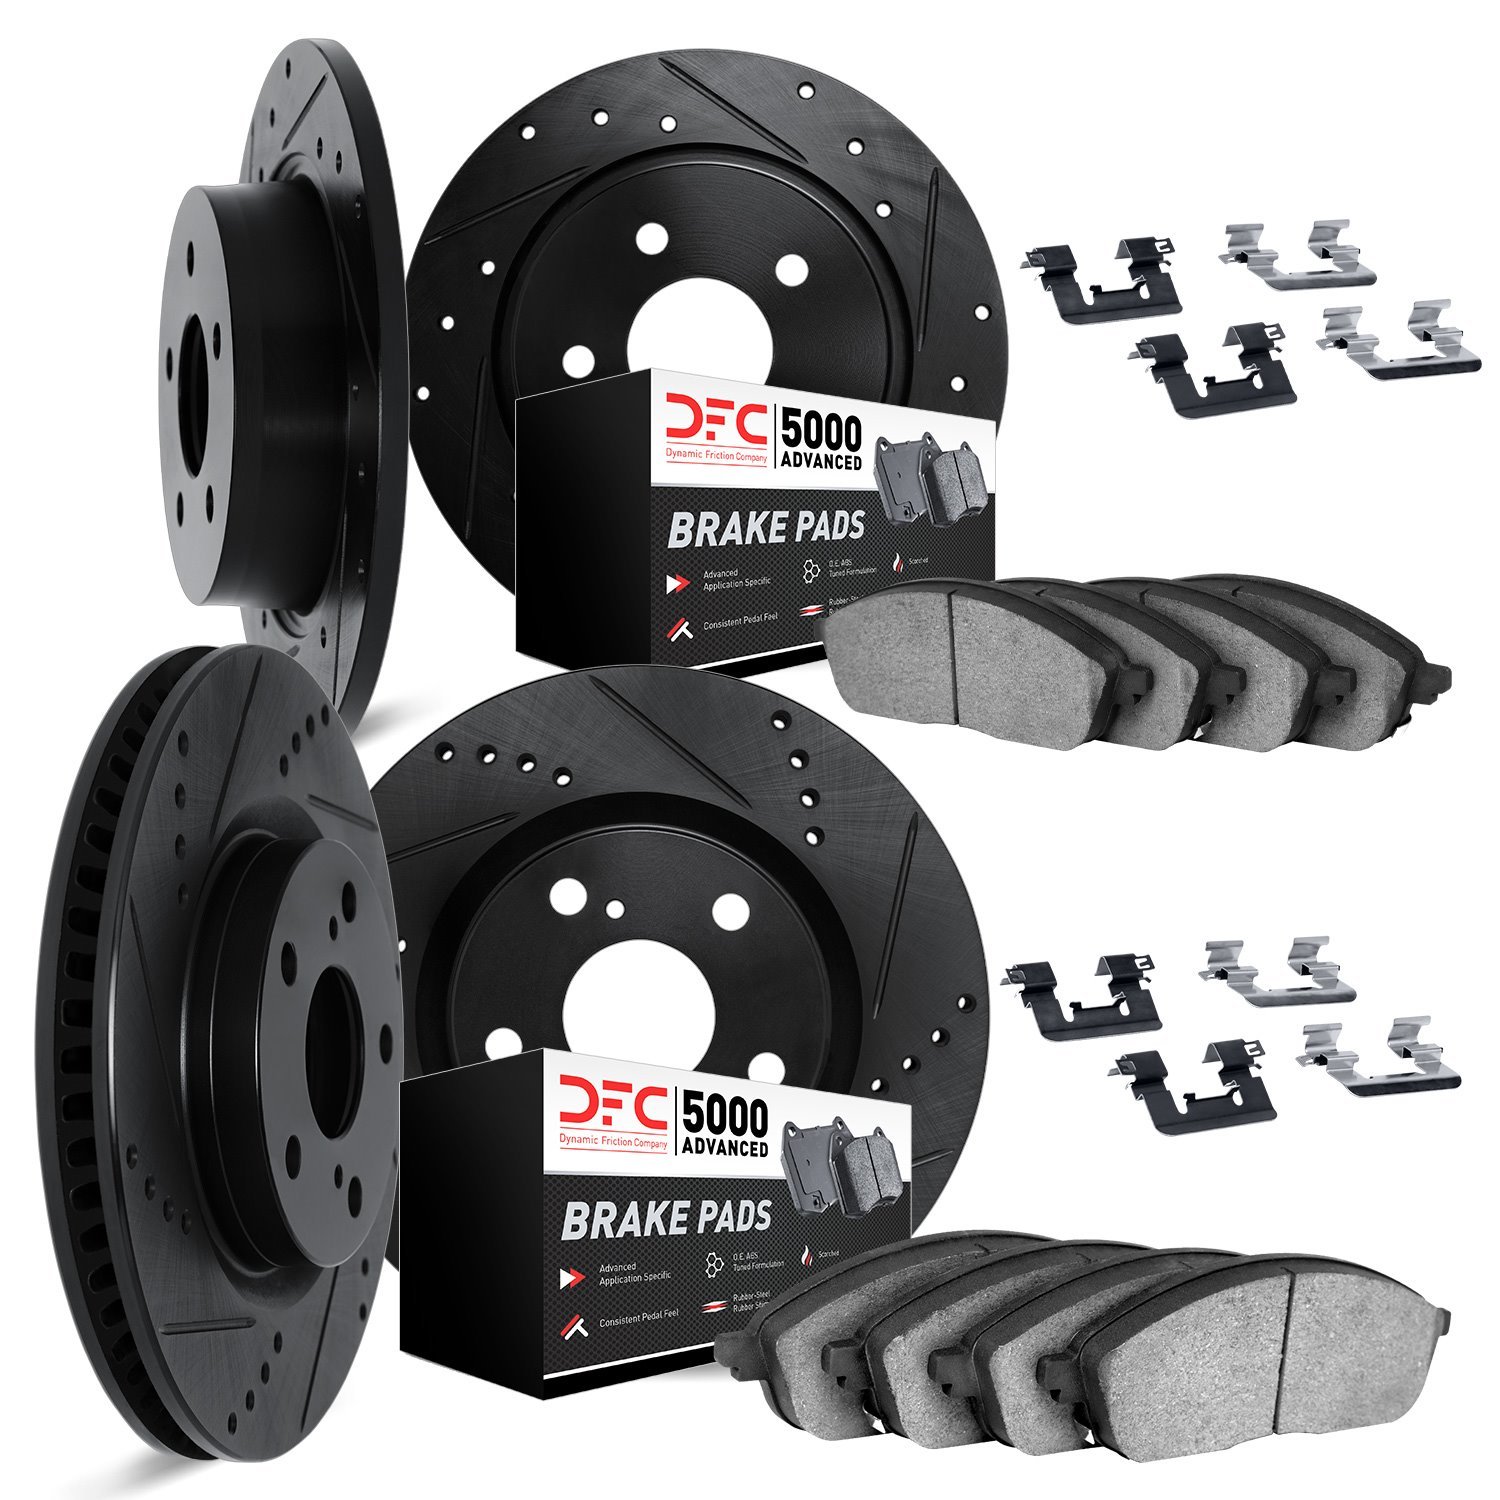 8514-54116 Drilled/Slotted Brake Rotors w/5000 Advanced Brake Pads Kit & Hardware [Black], 2015-2019 Ford/Lincoln/Mercury/Mazda,